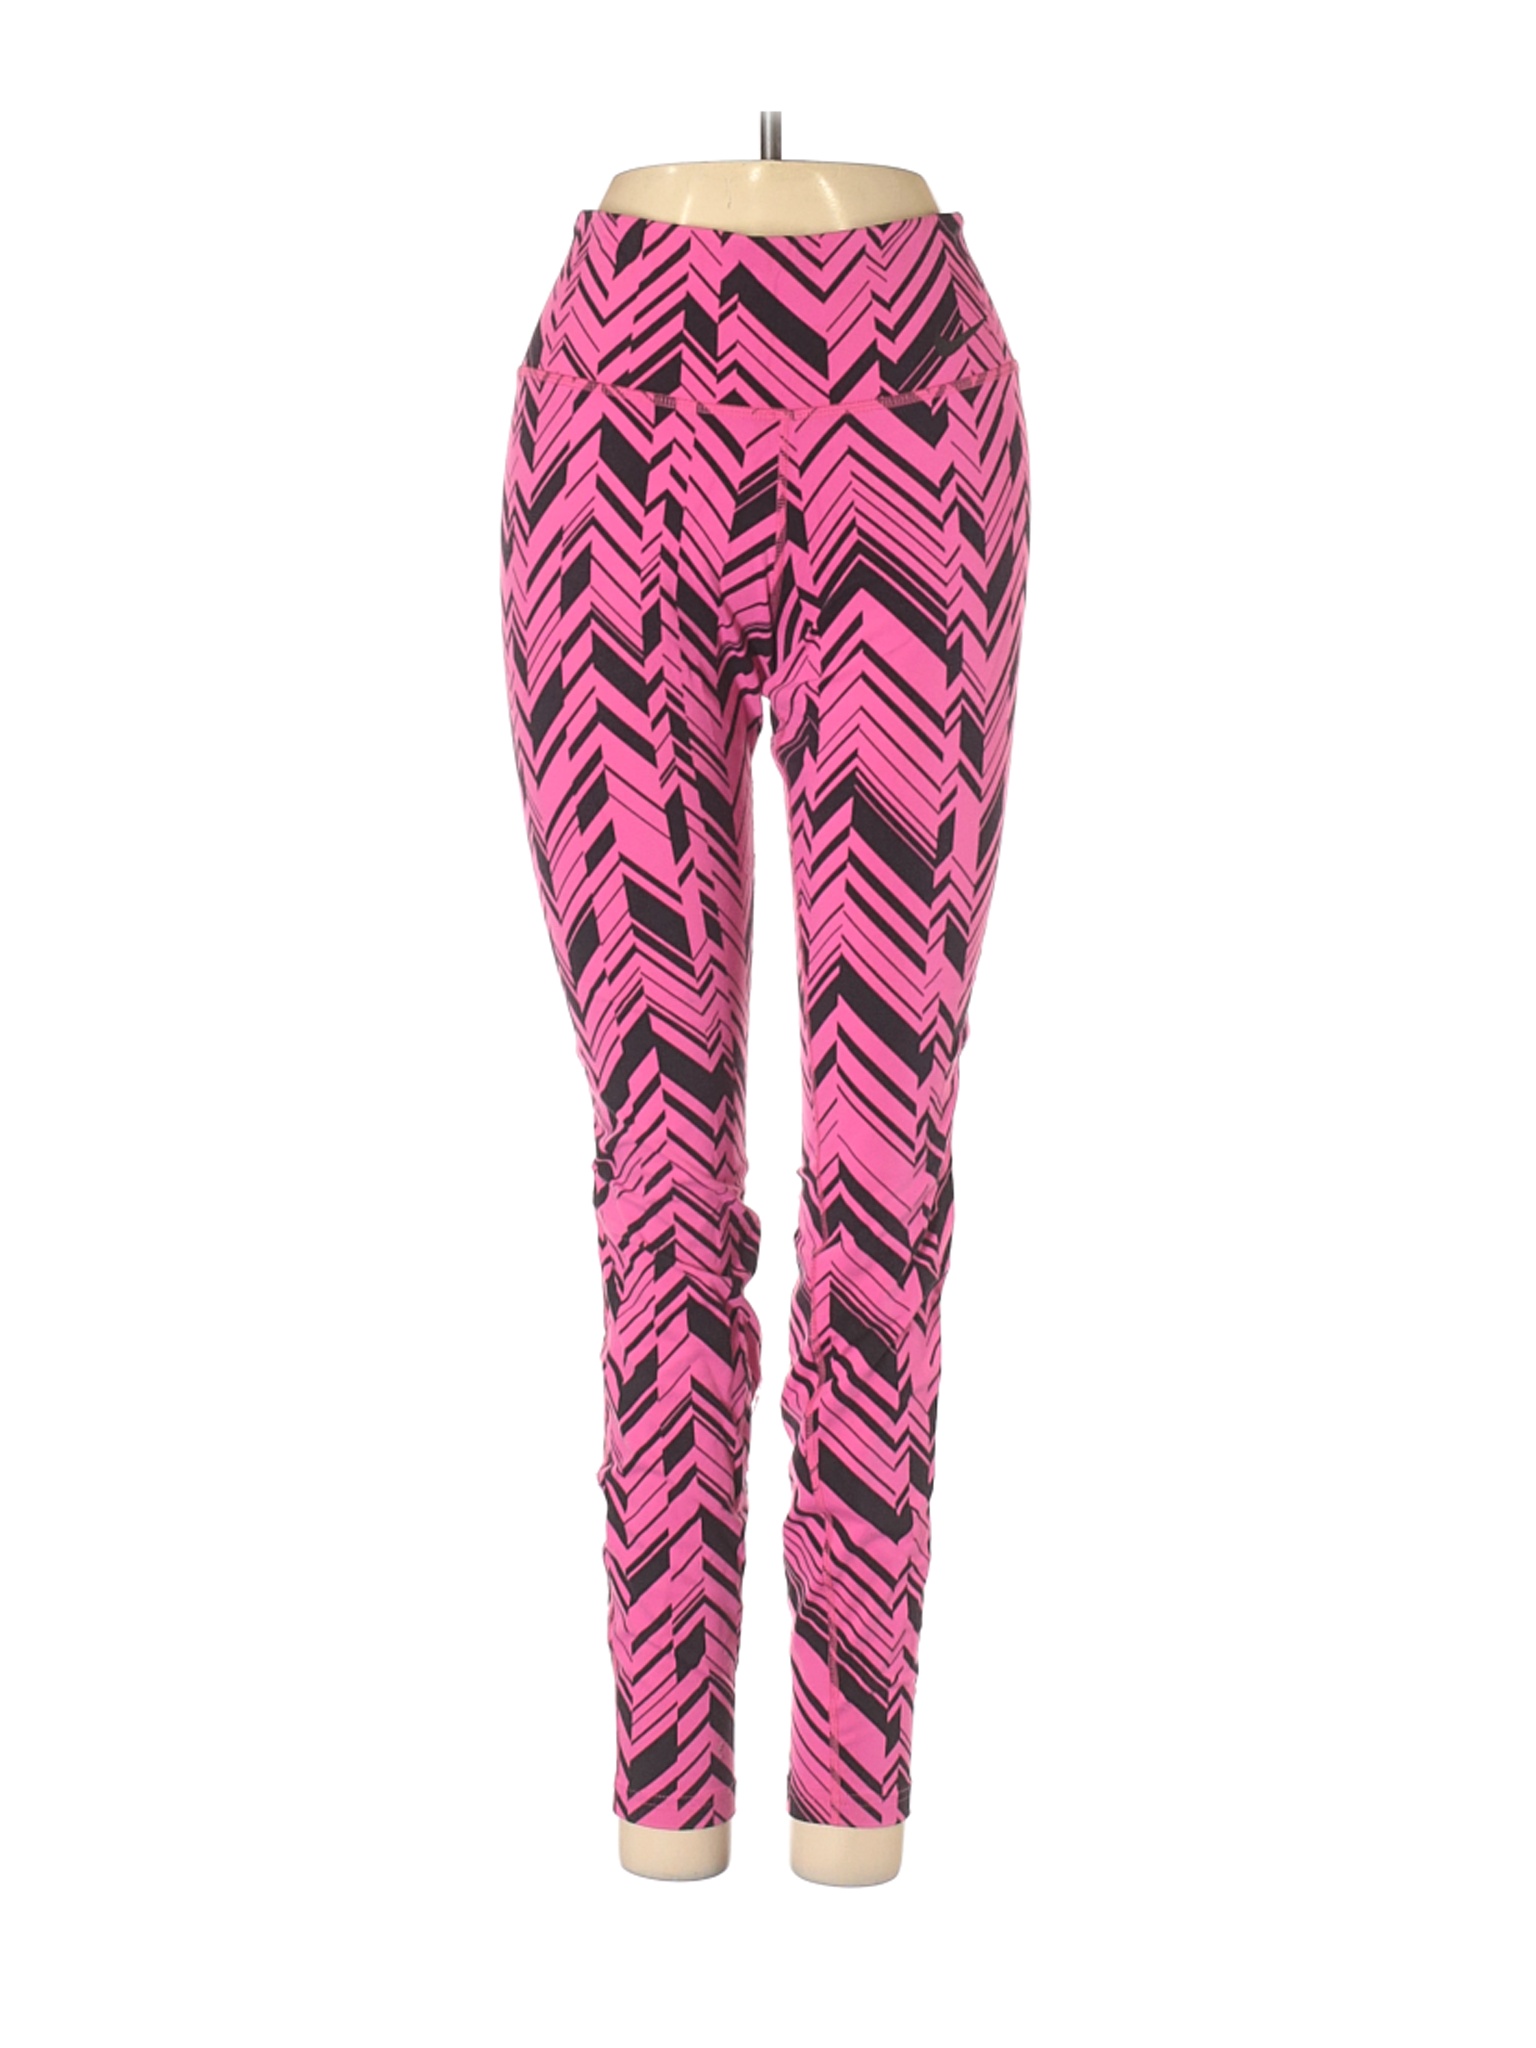 Nike Women Pink Active Pants S | eBay